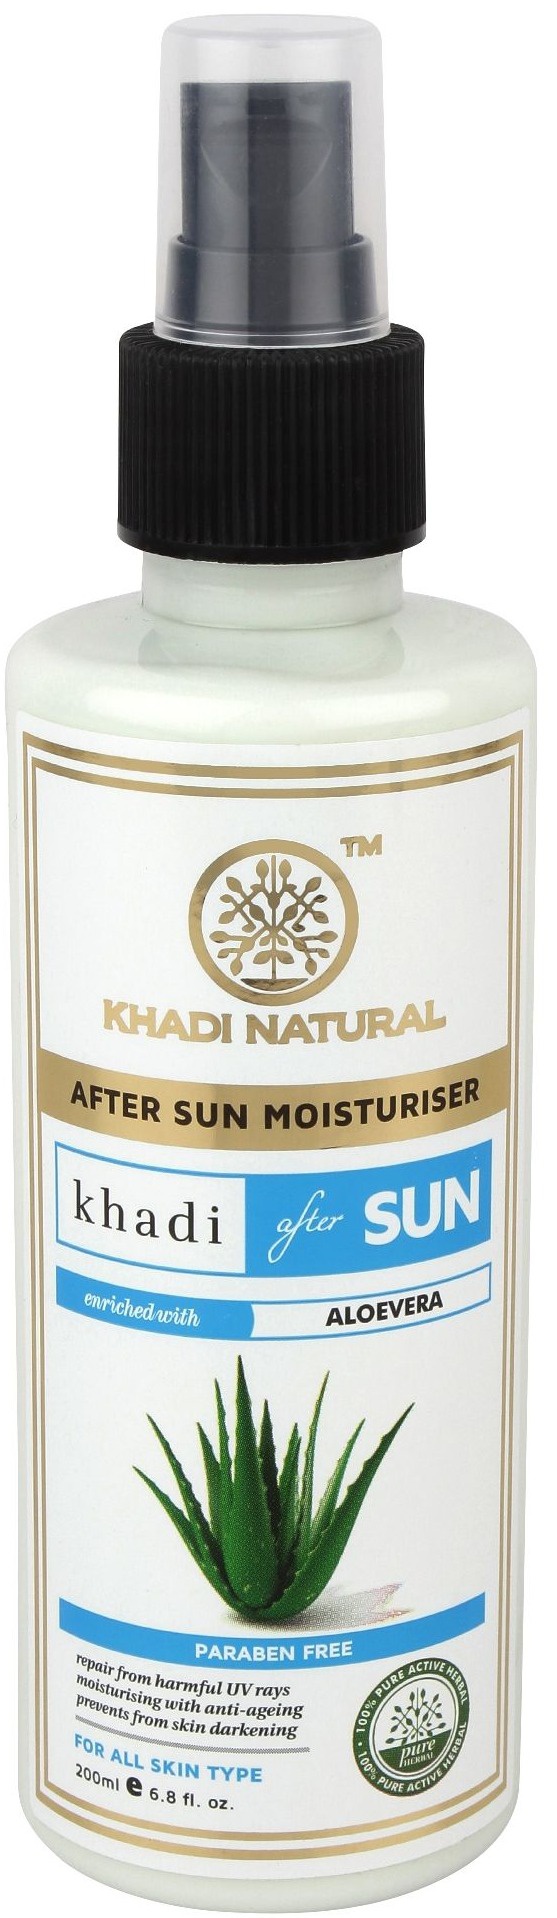 Khadi Natural After Sun Aloe Vera Moisturiser